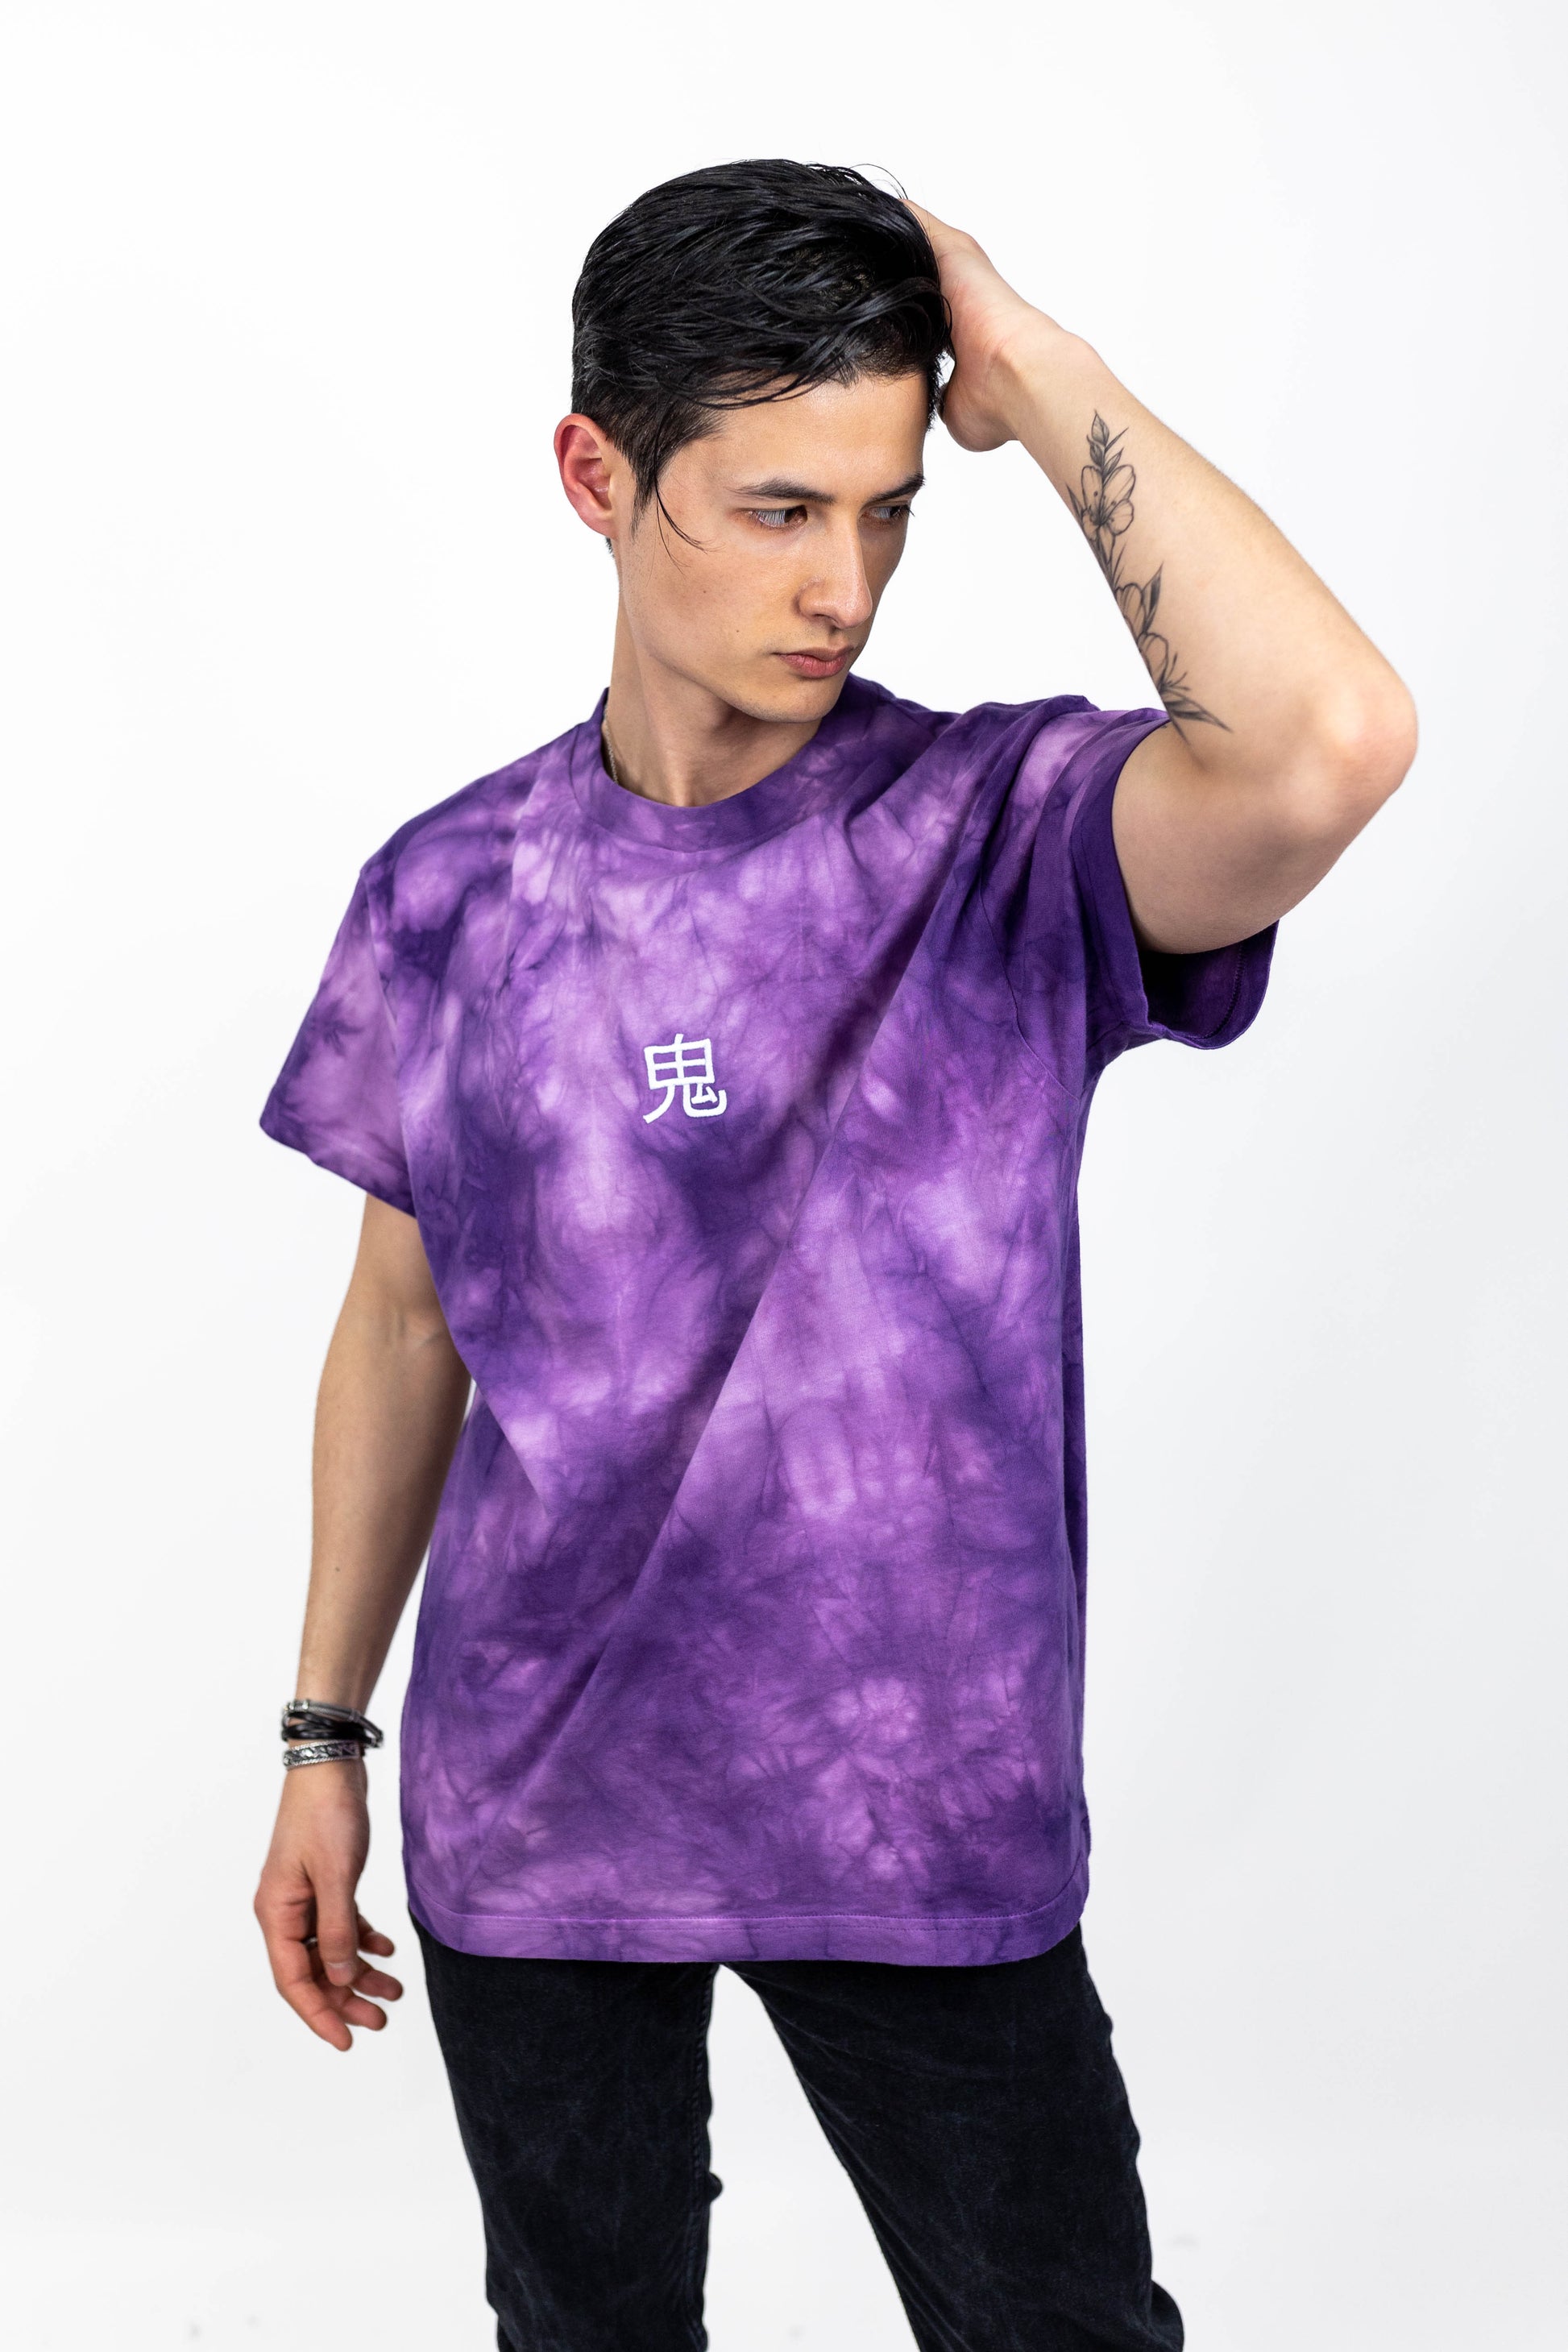 Tee Shirt violet effet tye and dye